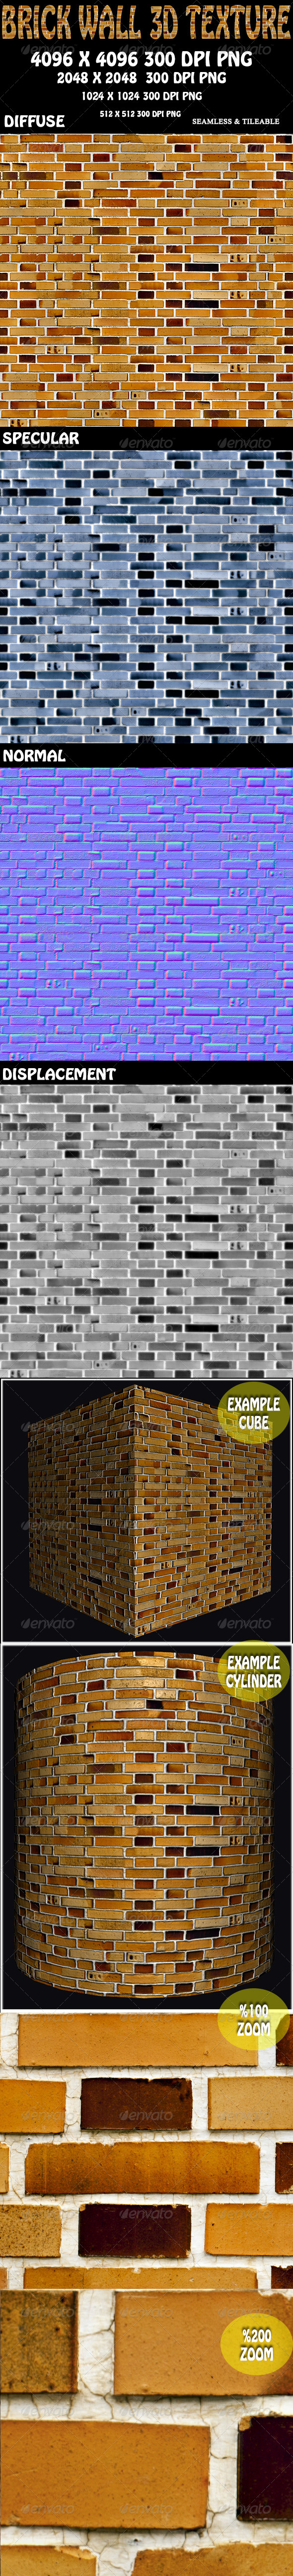 Brick Wall 3D - 3Docean 8131728